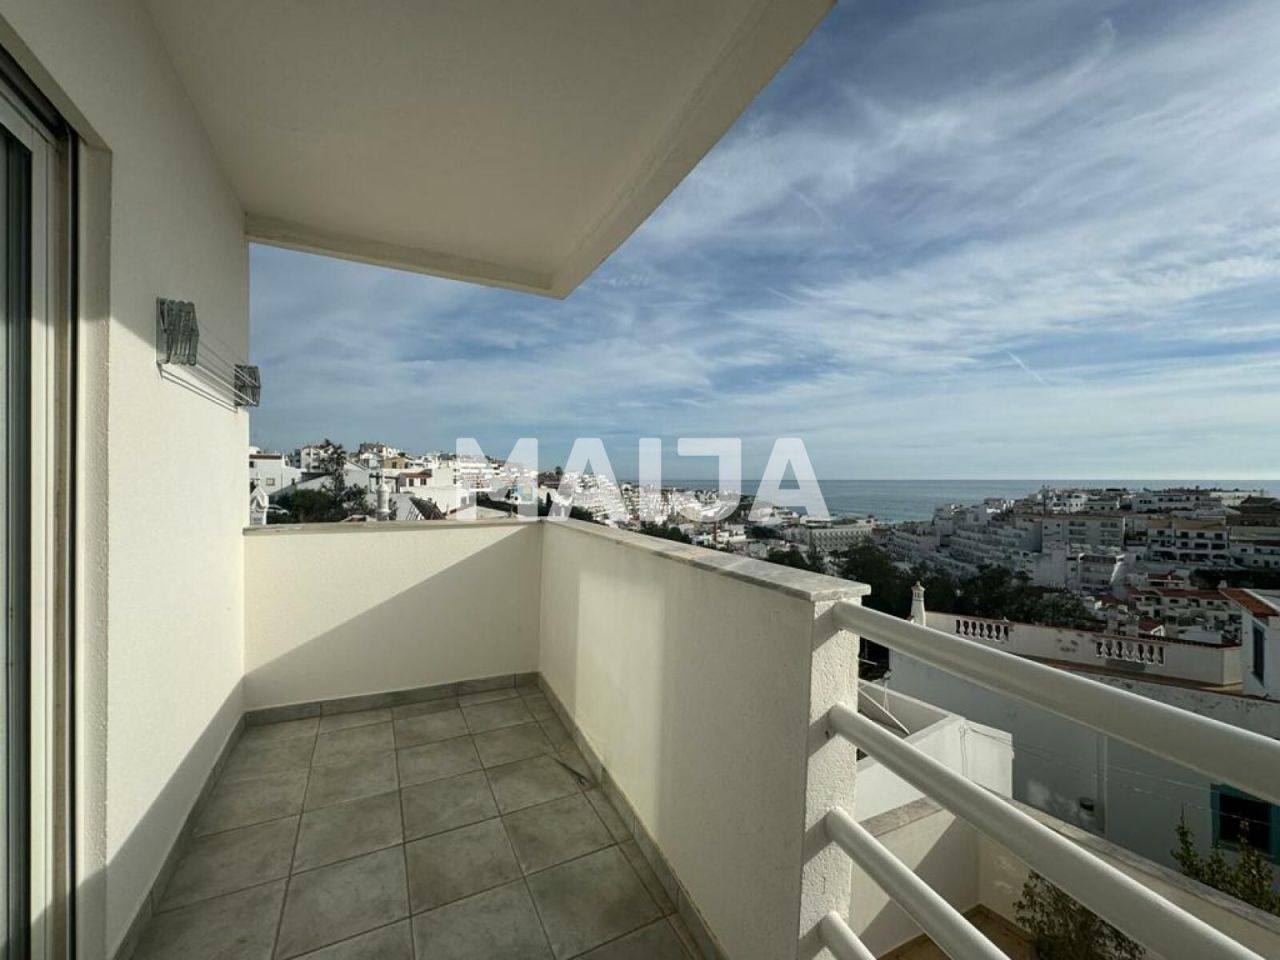 Apartment in Albufeira, Portugal, 88.5 m2 - Foto 1